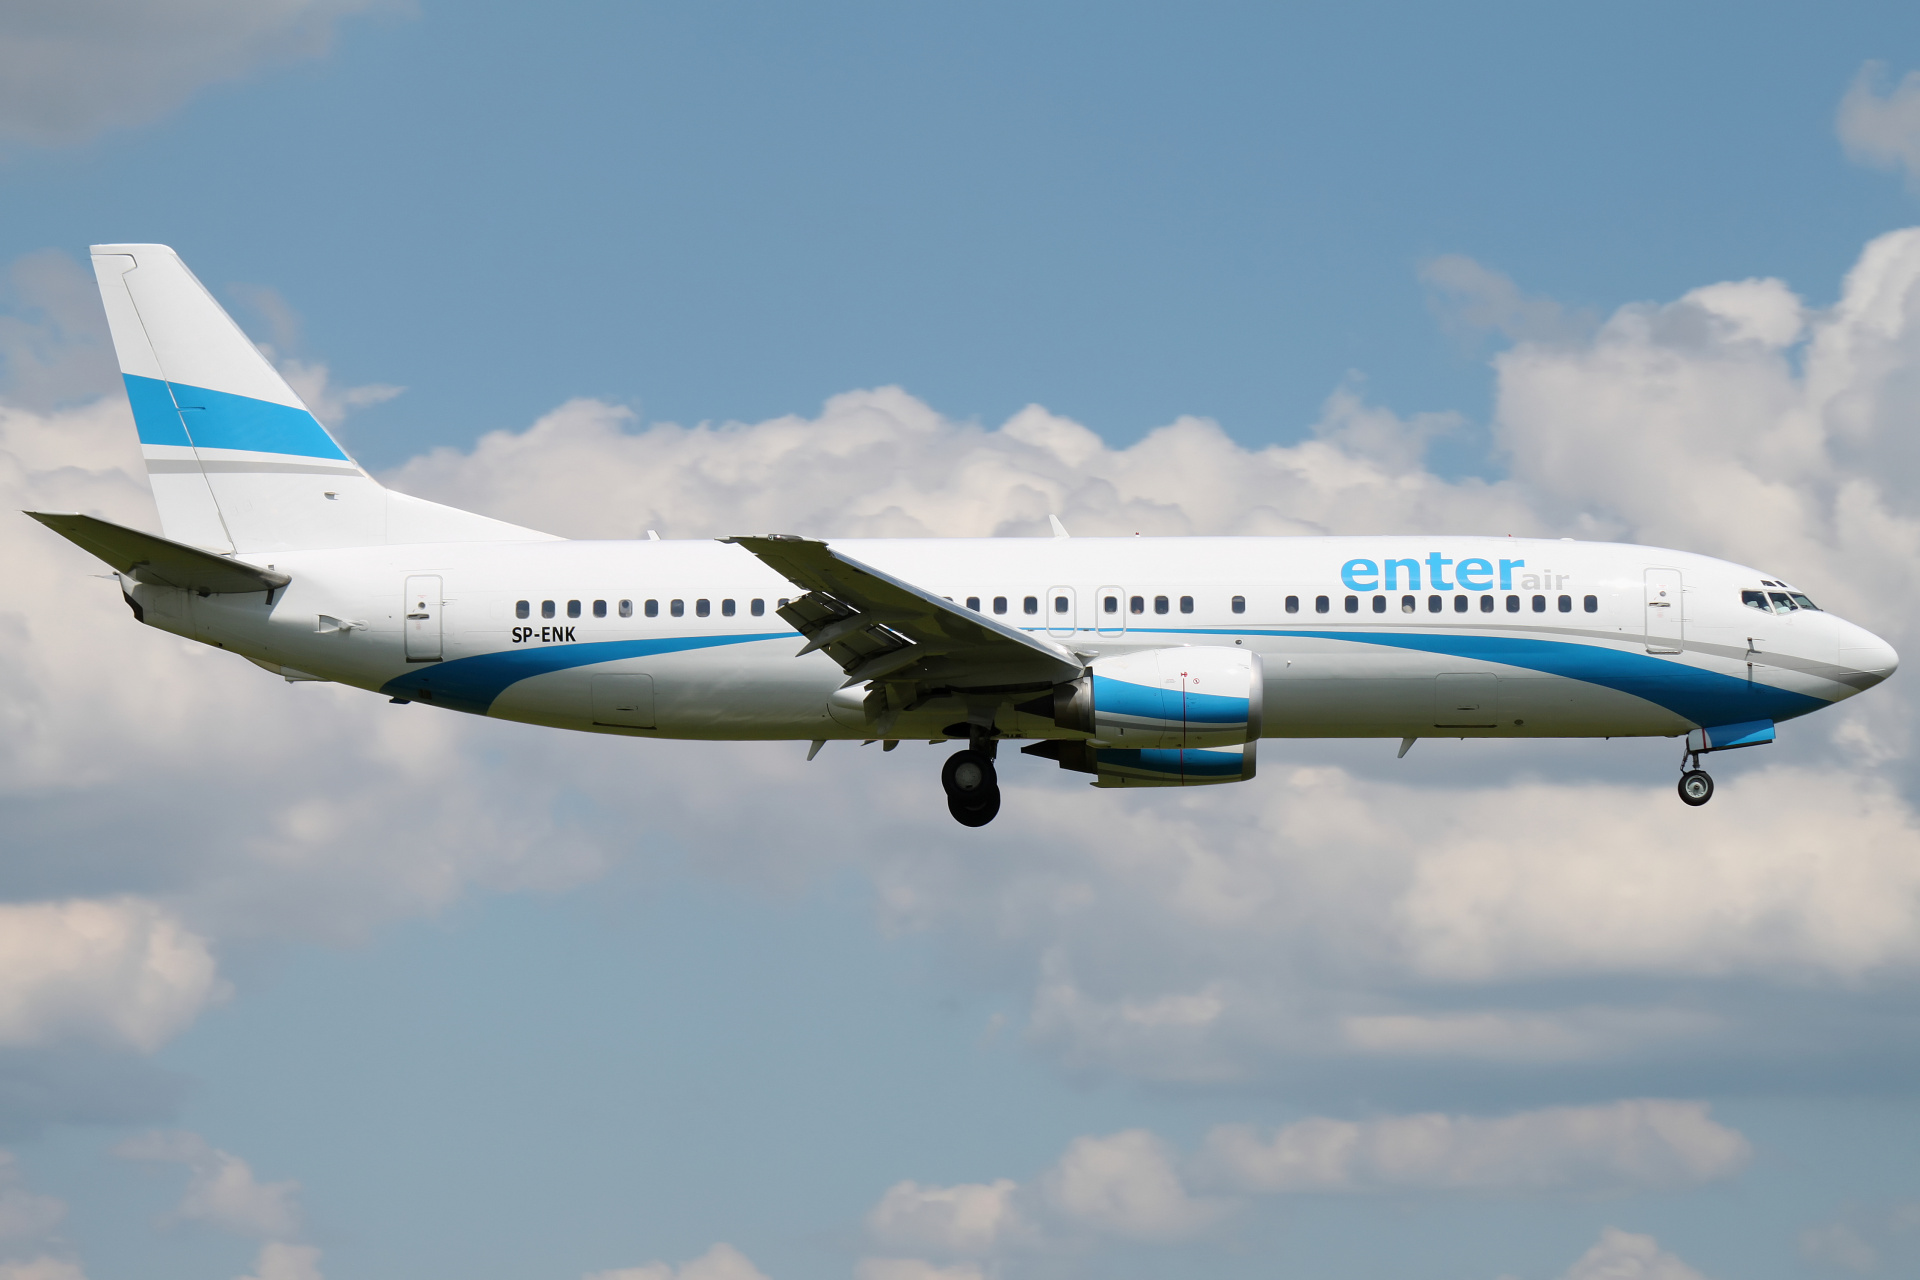 SP-ENK (Aircraft » EPWA Spotting » Boeing 737-400 » Enter Air)